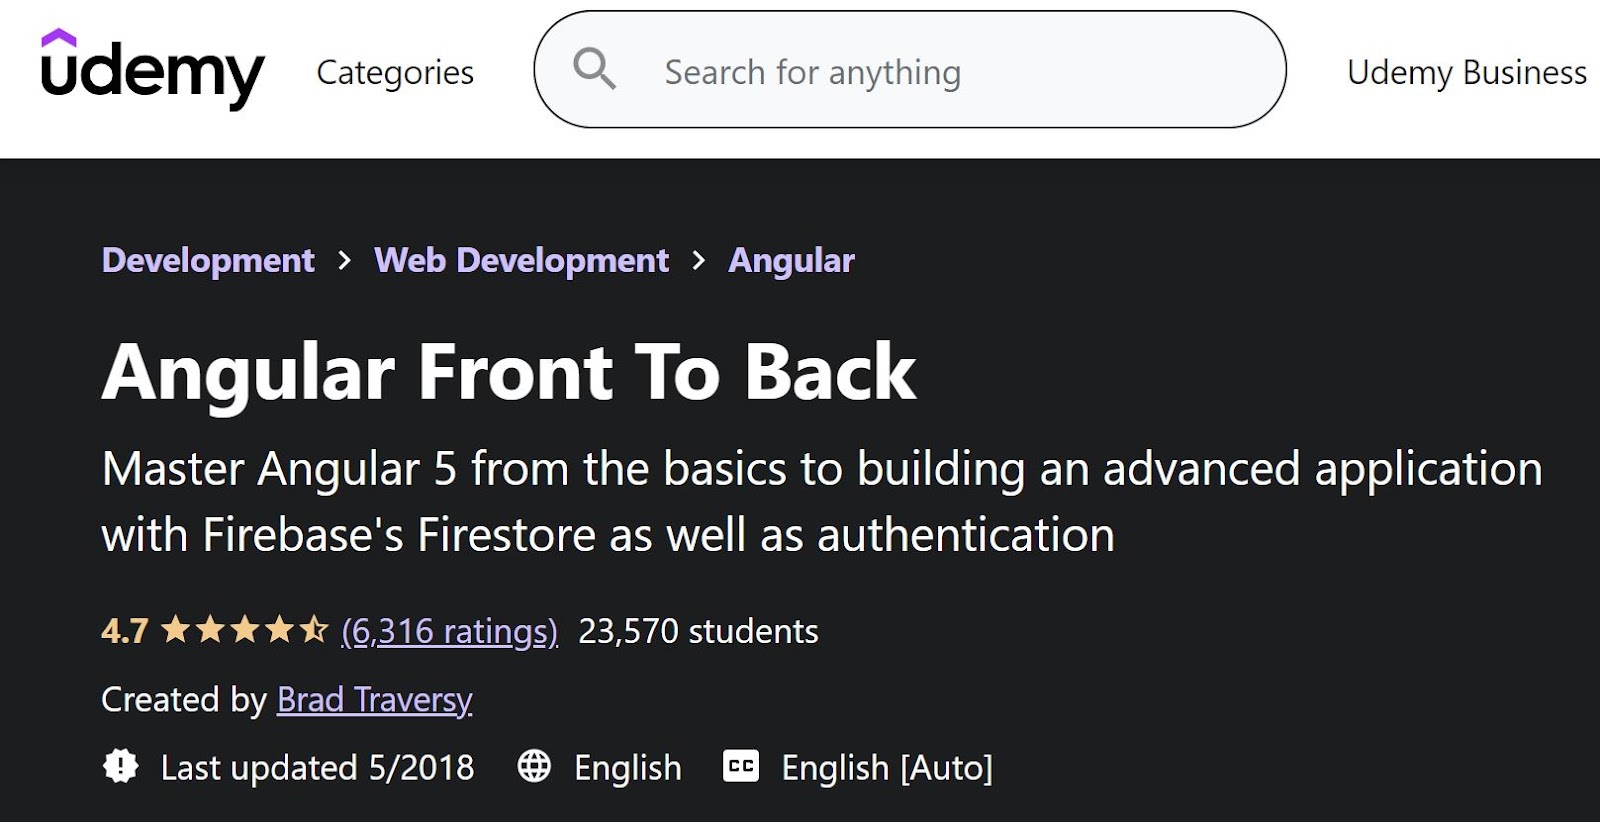 Angular Front to Back webpage screenshot